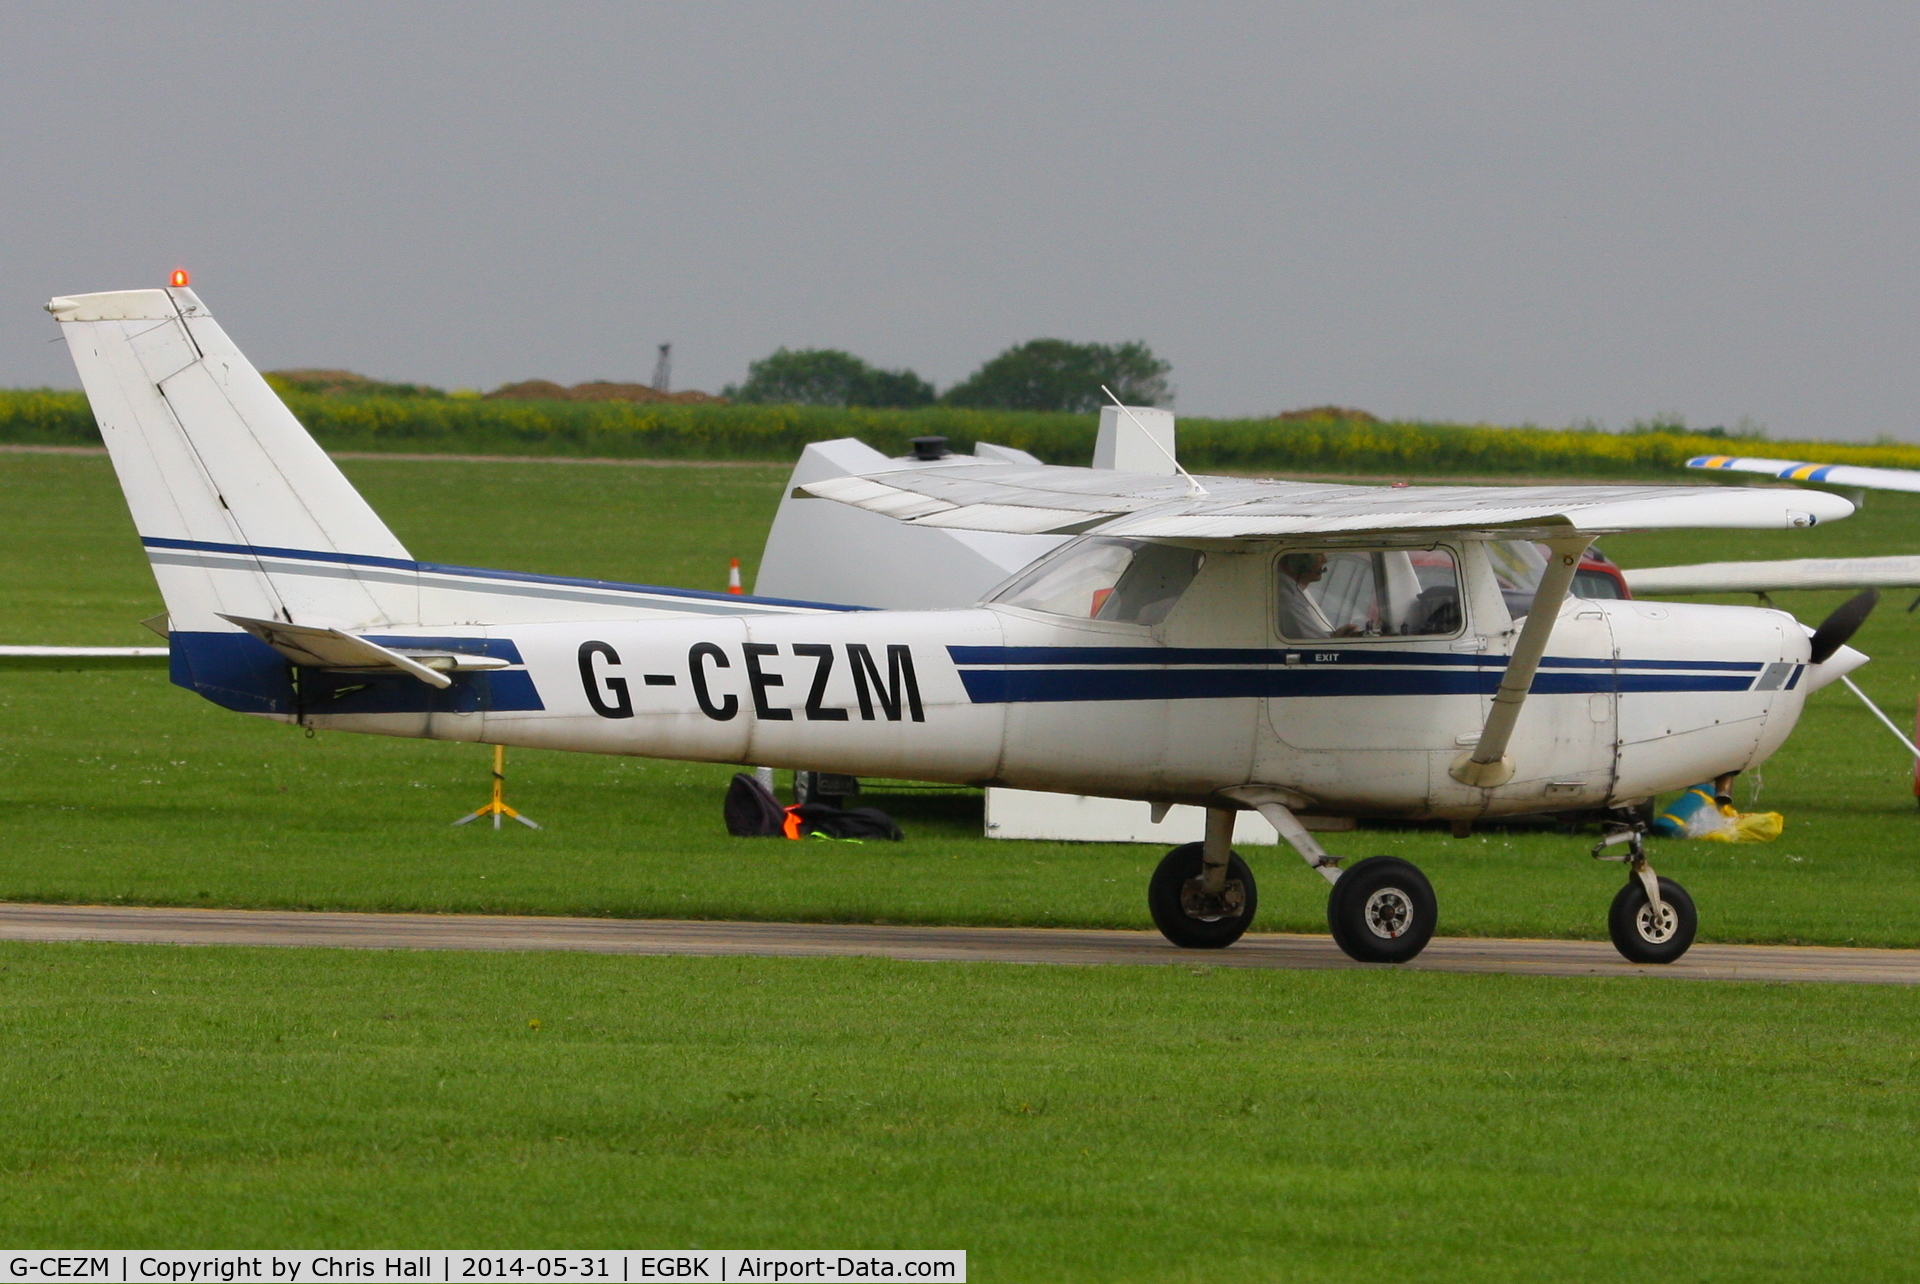 G-CEZM, 1981 Cessna 152 C/N 15285179, at AeroExpo 2014